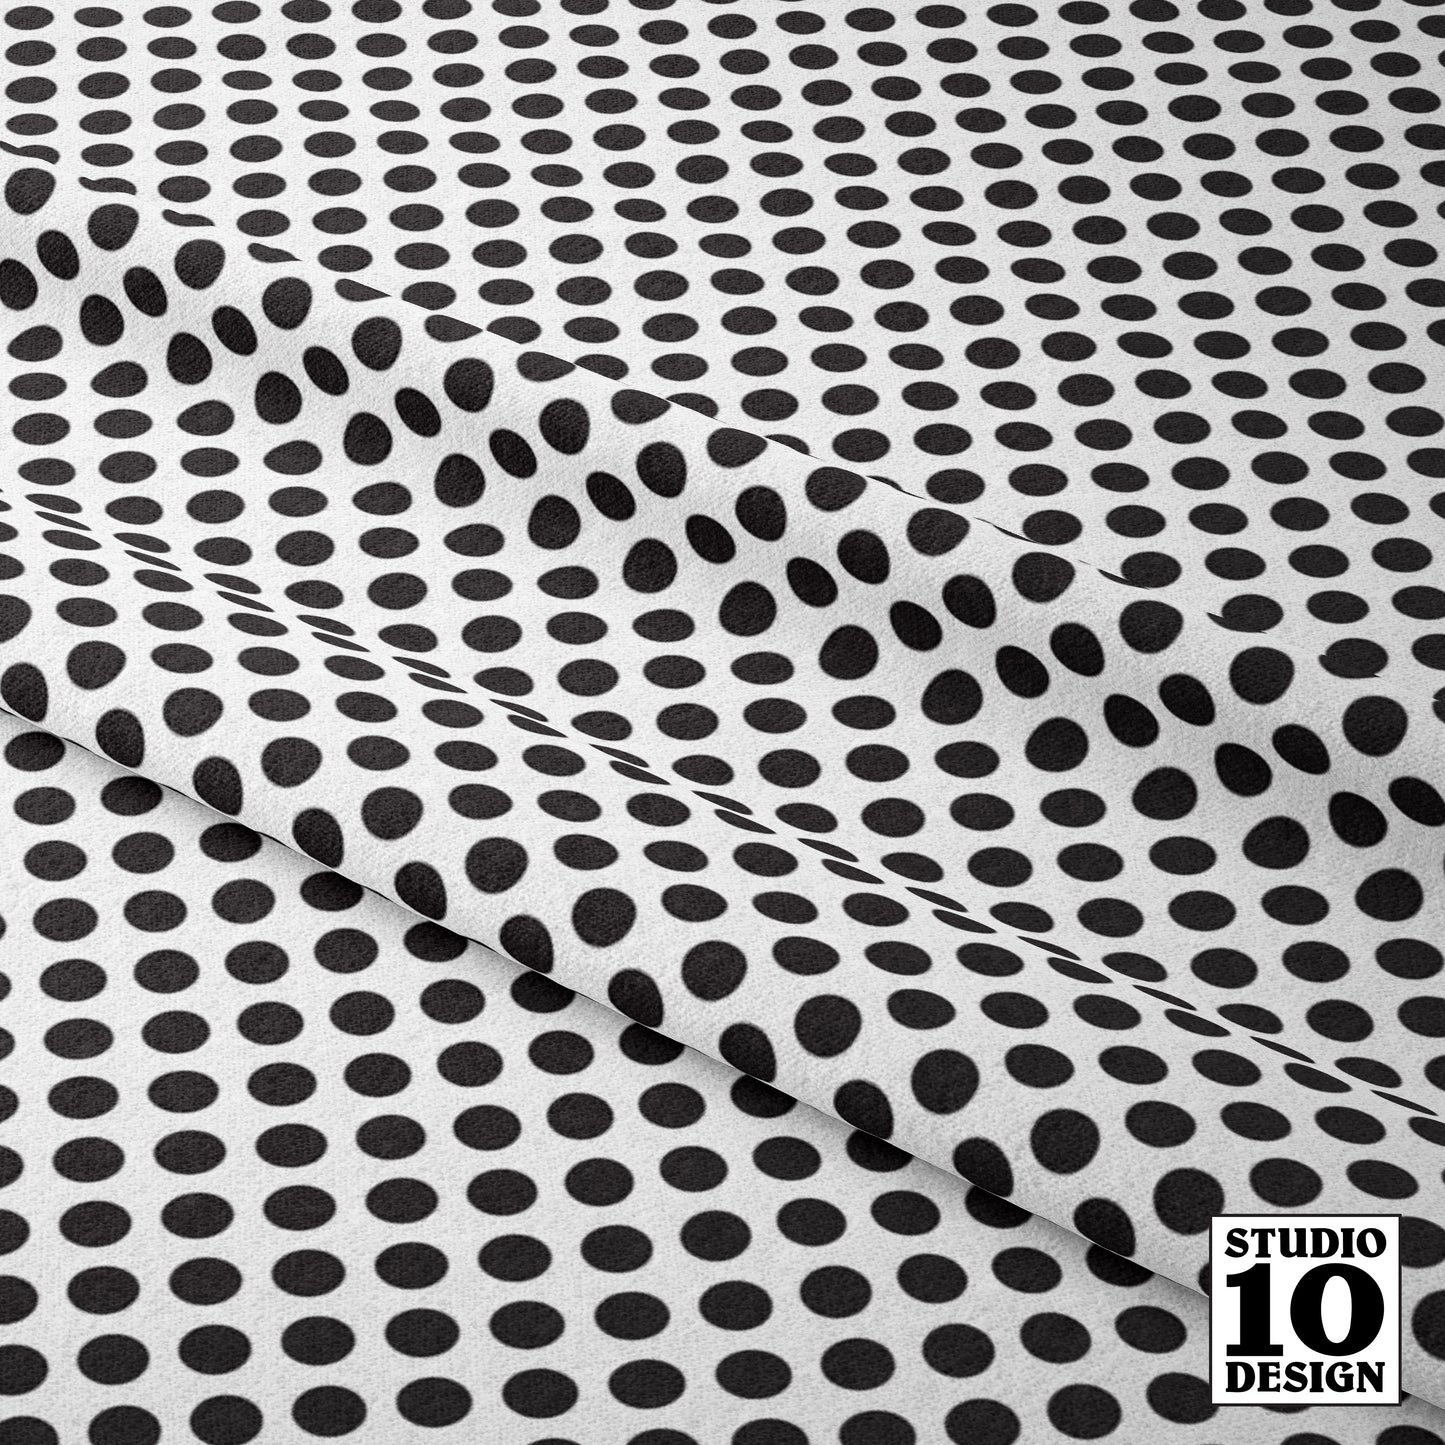 Ben Day Dots, Black & White Printed Fabric by Studio Ten Design